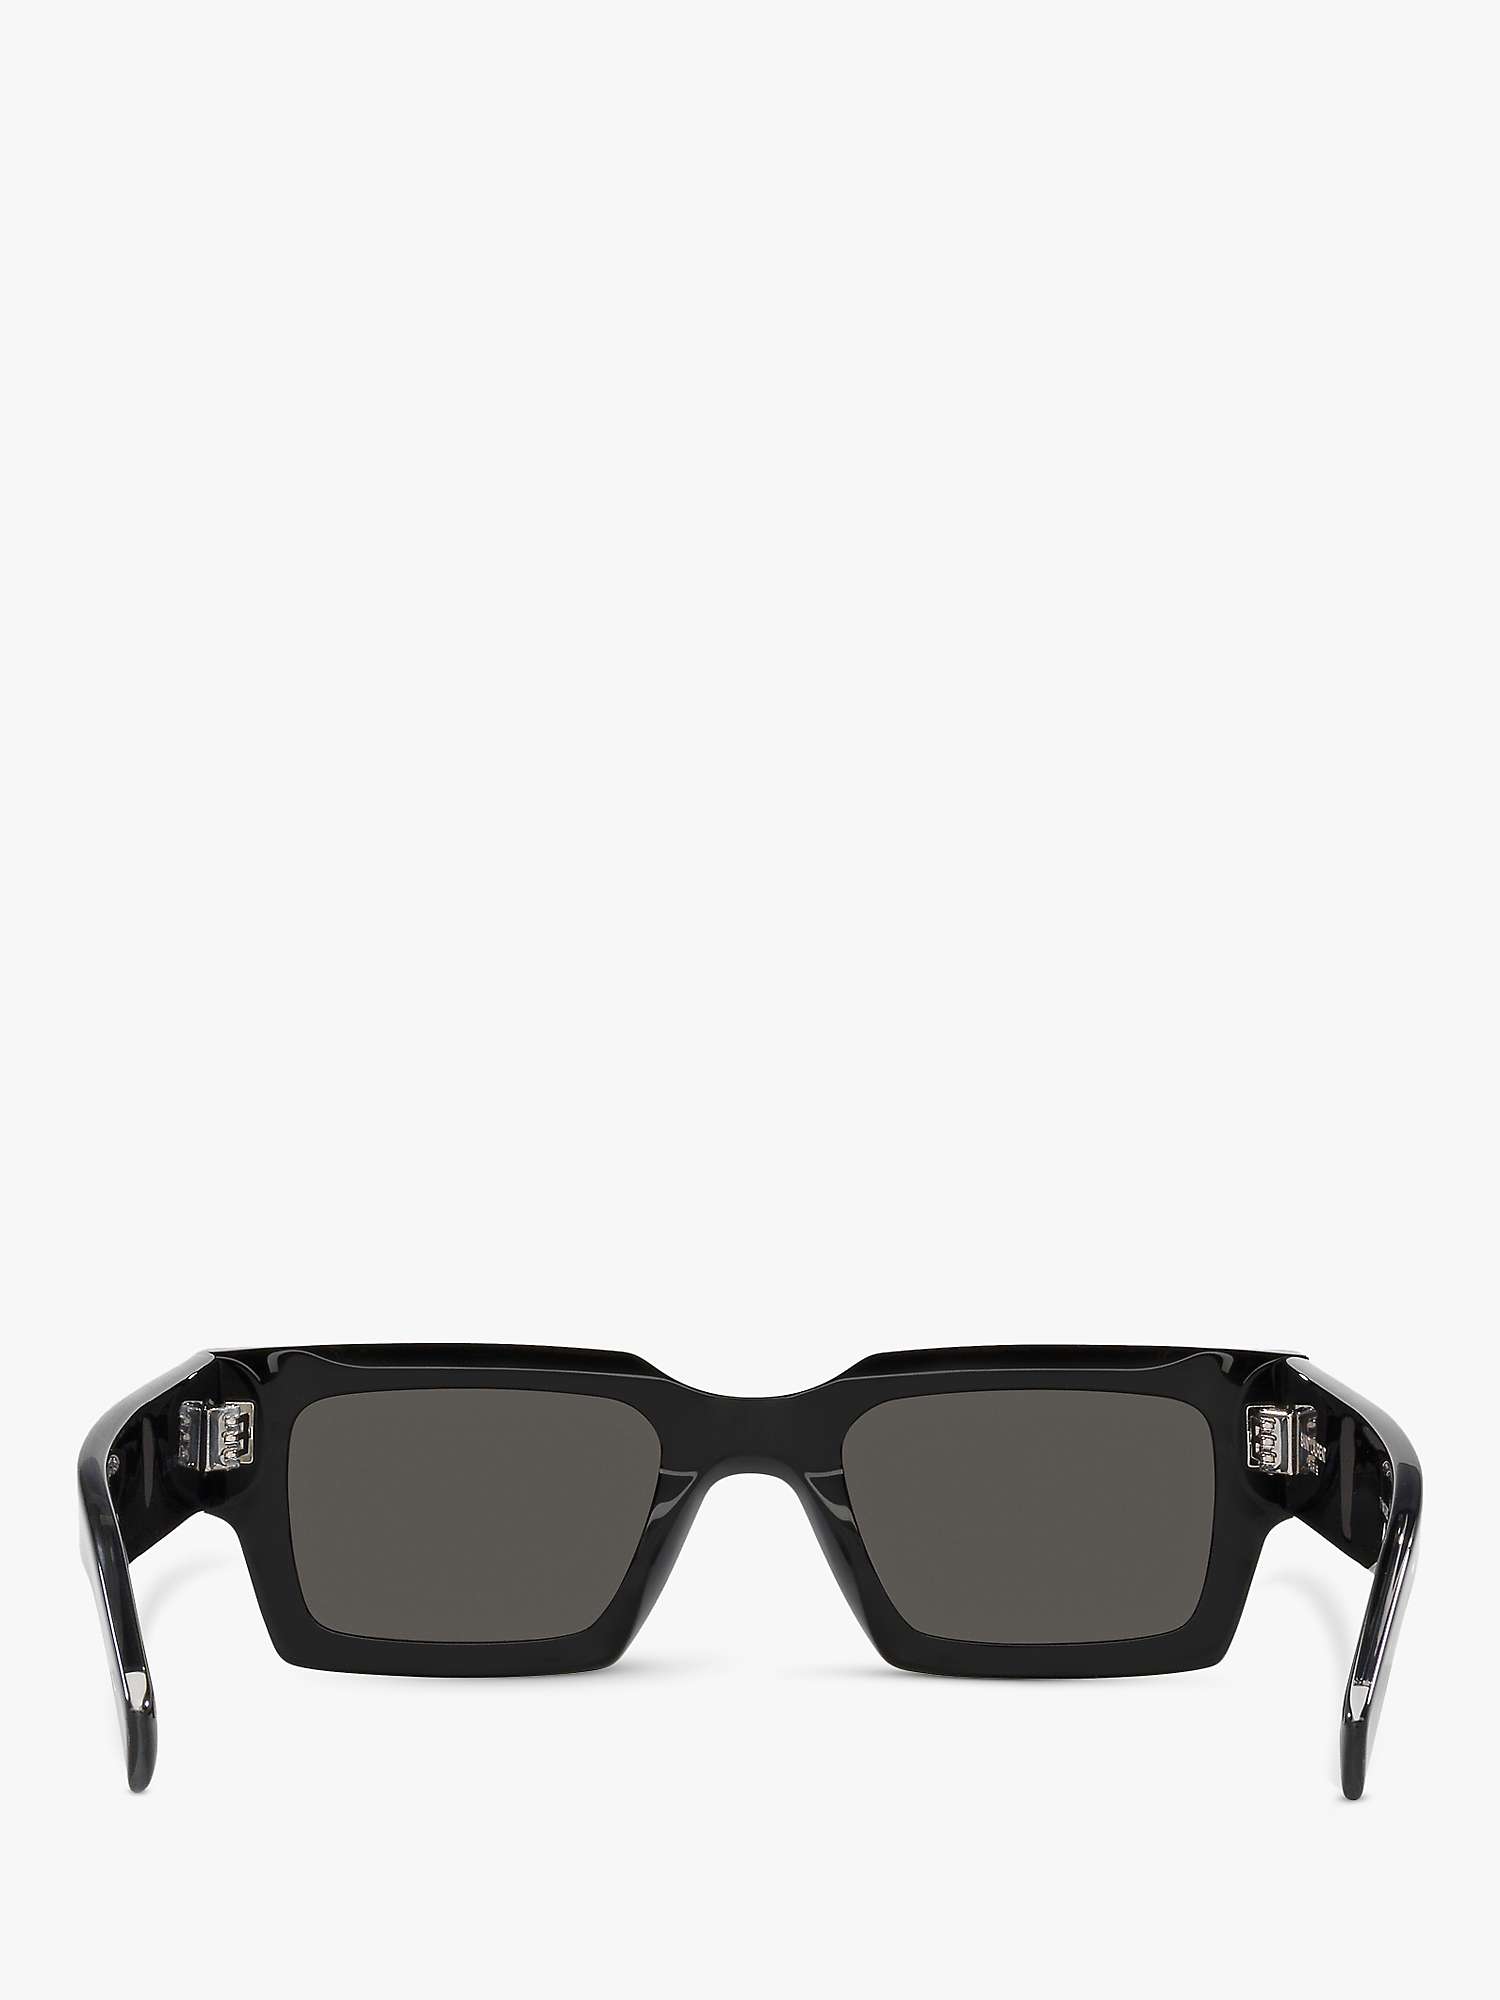 Buy Yves Saint Laurent YS000468 Unisex Square Sunglasses, Black/Grey Online at johnlewis.com